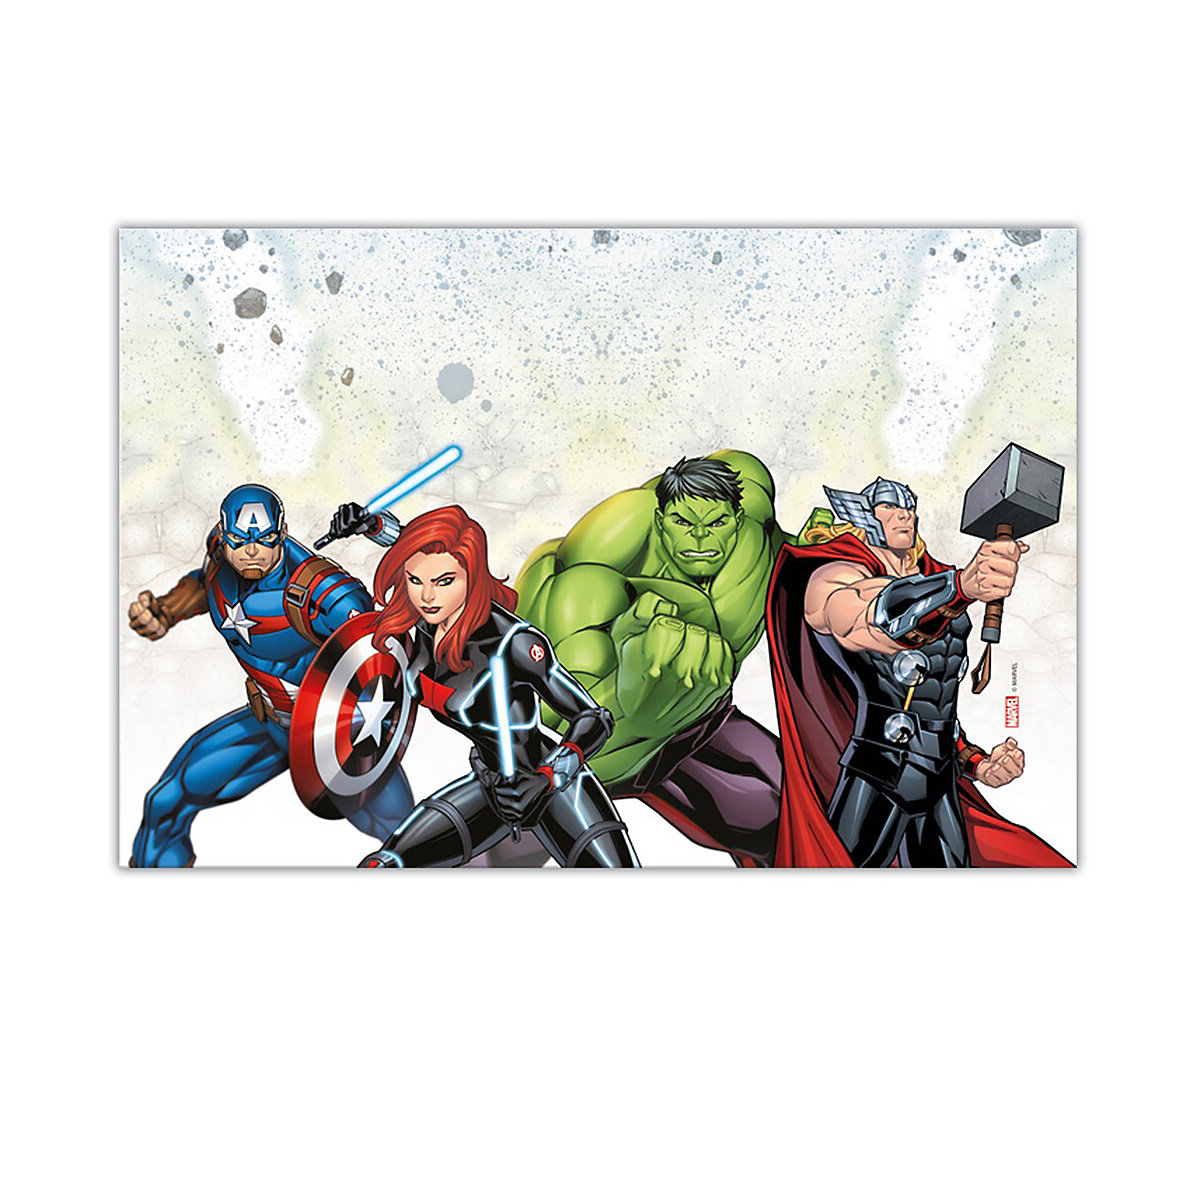 Procos Tischdecke Marvel Avengers 120x180cm aus Kunststoff